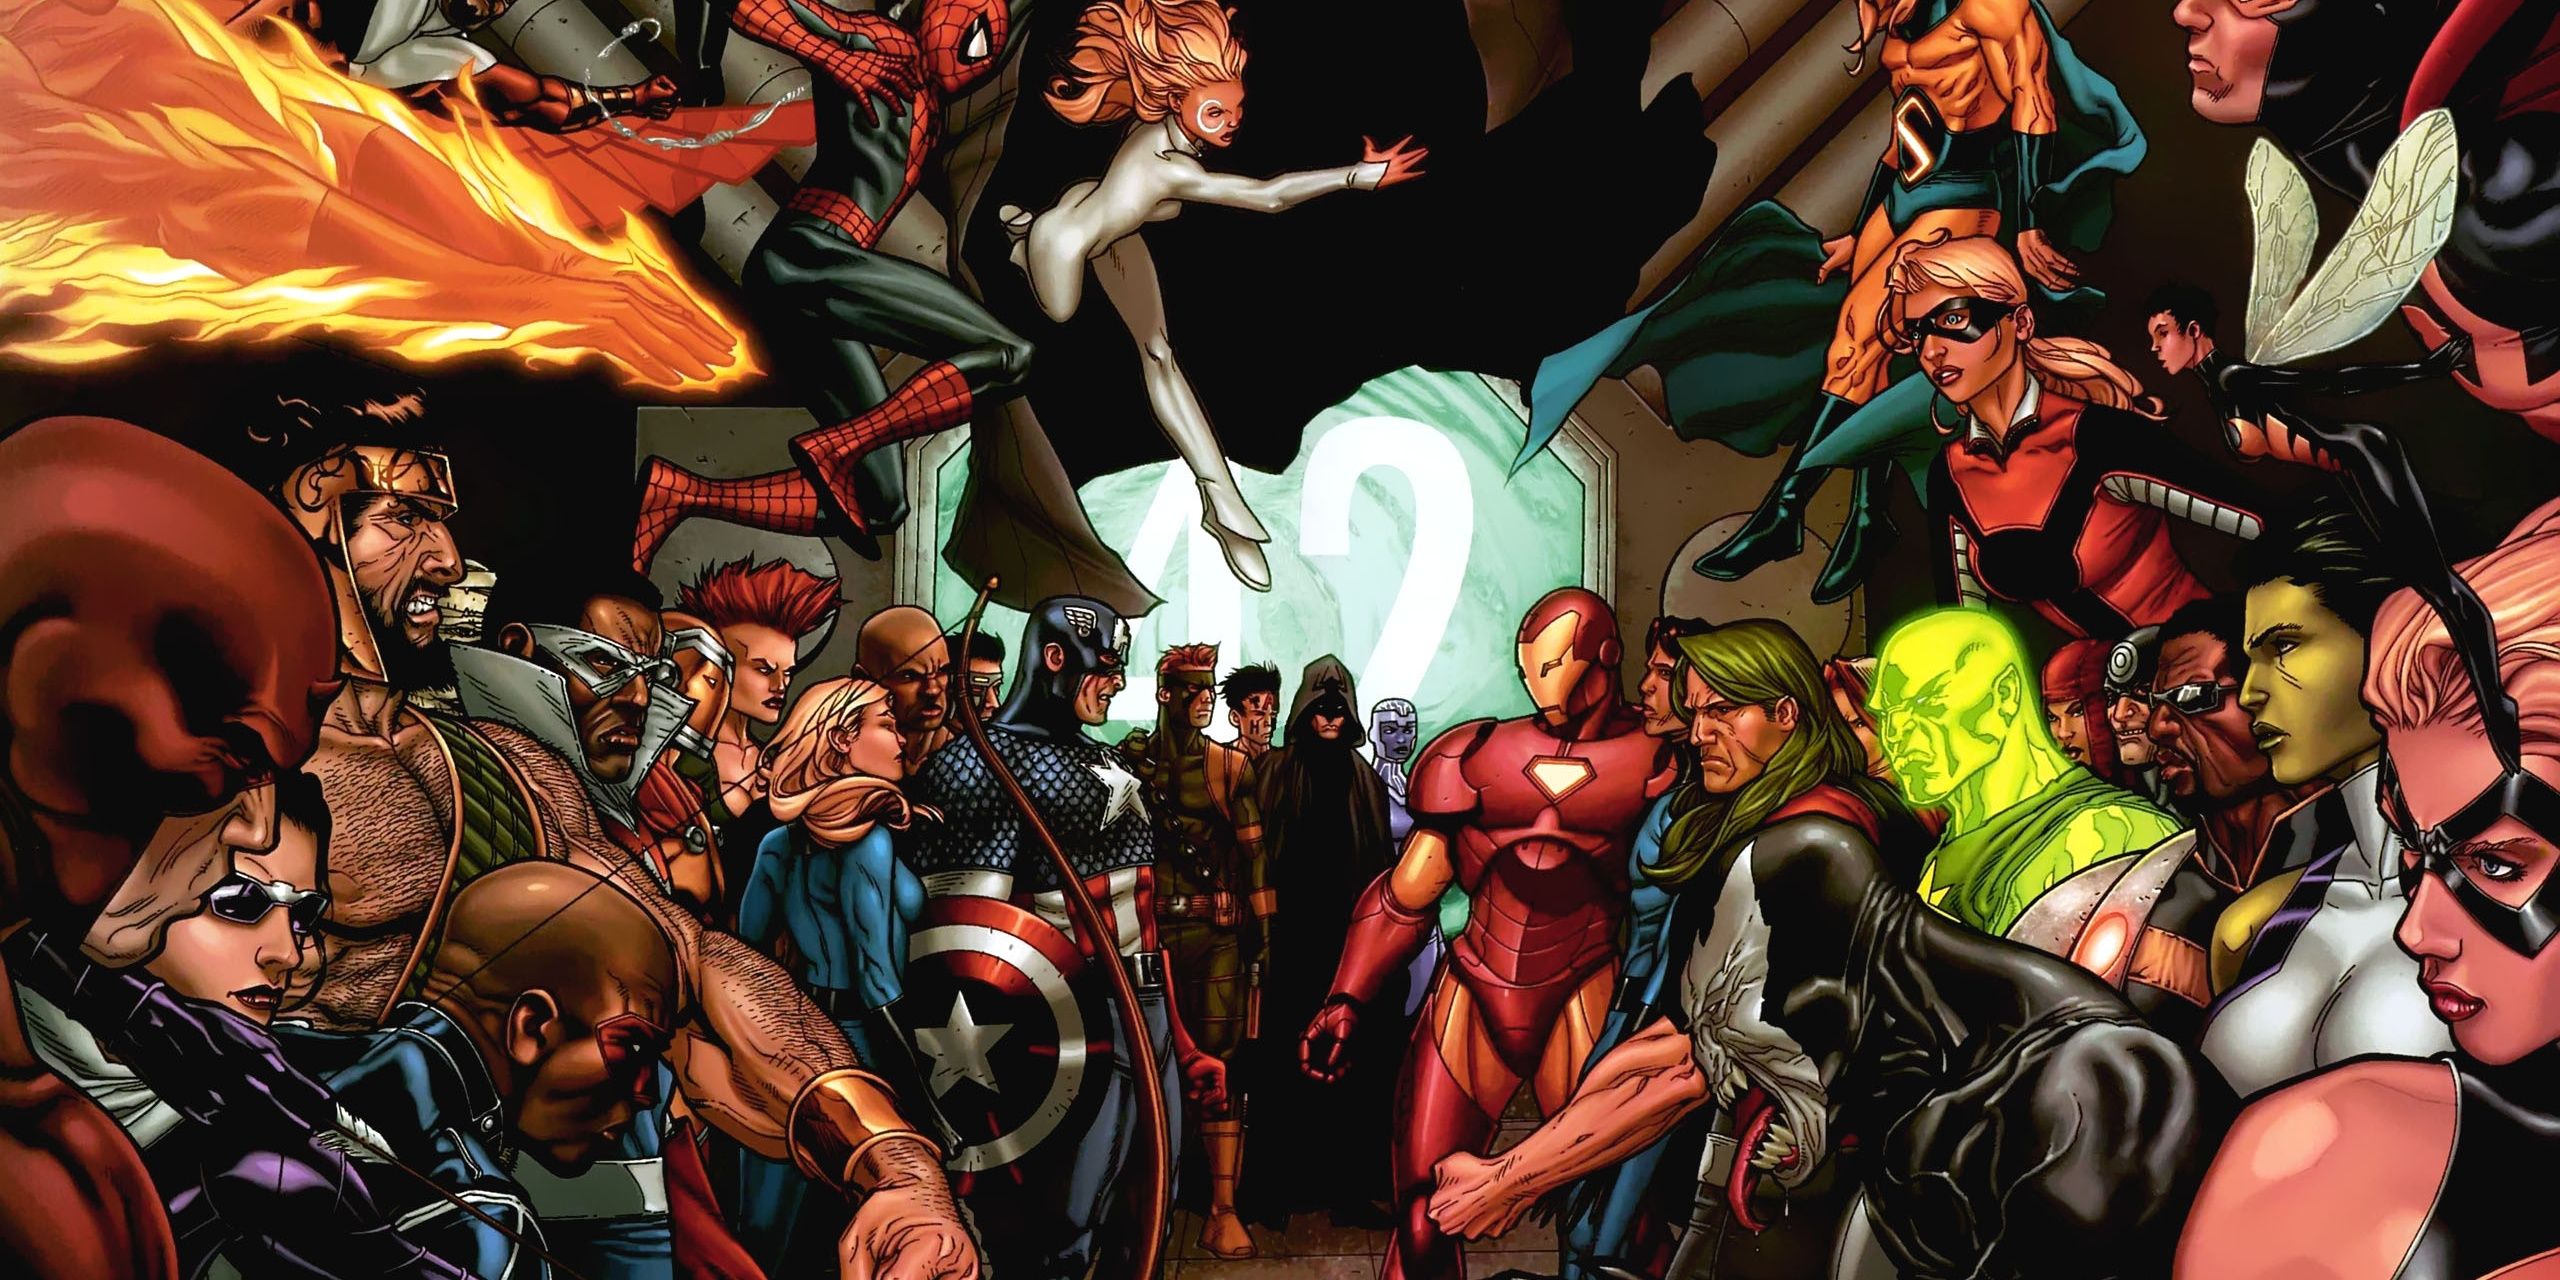 Cap's Heroes versus Iron Man's heroes during Civil War